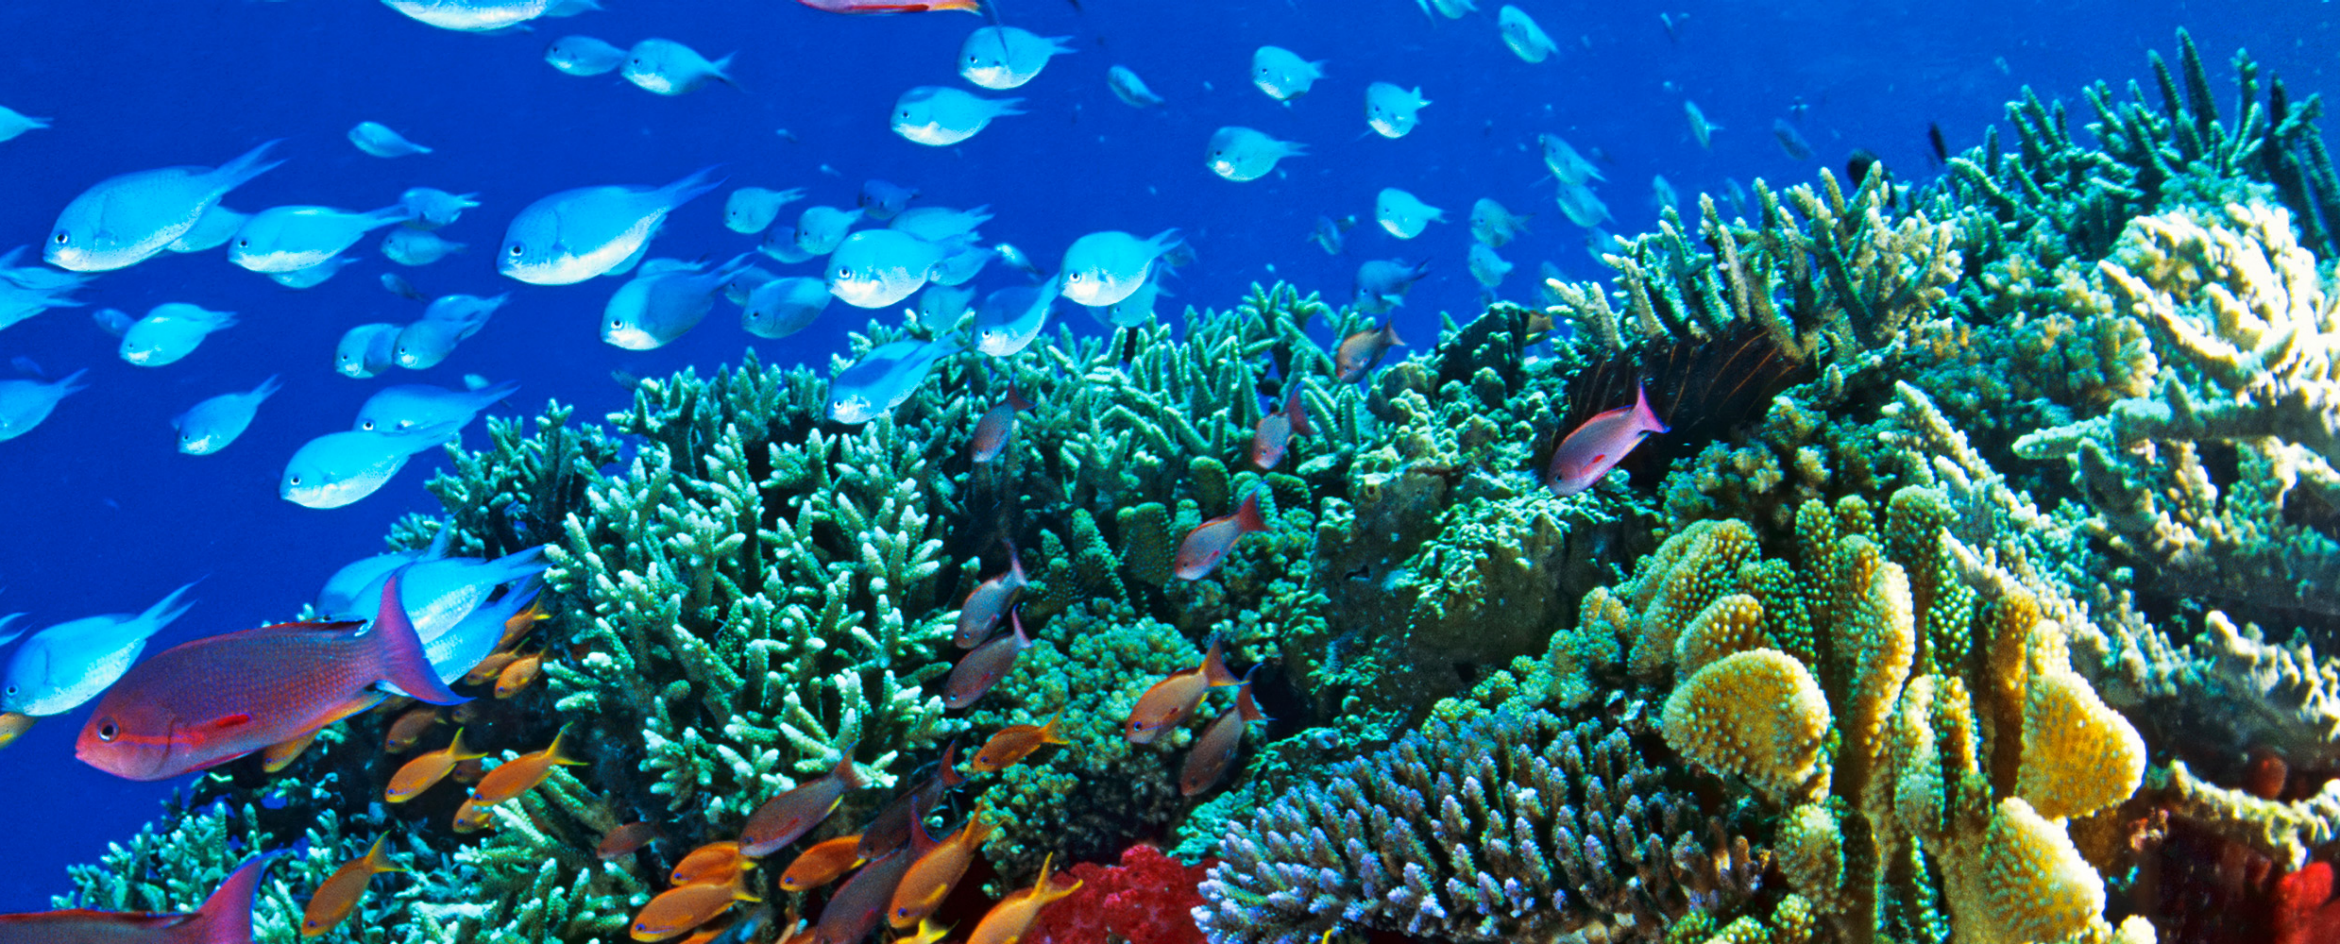 Great Barrier Reef Wallpaper, Barrier, Beautiful, Great, Natural, Reef, Wallpaper, World